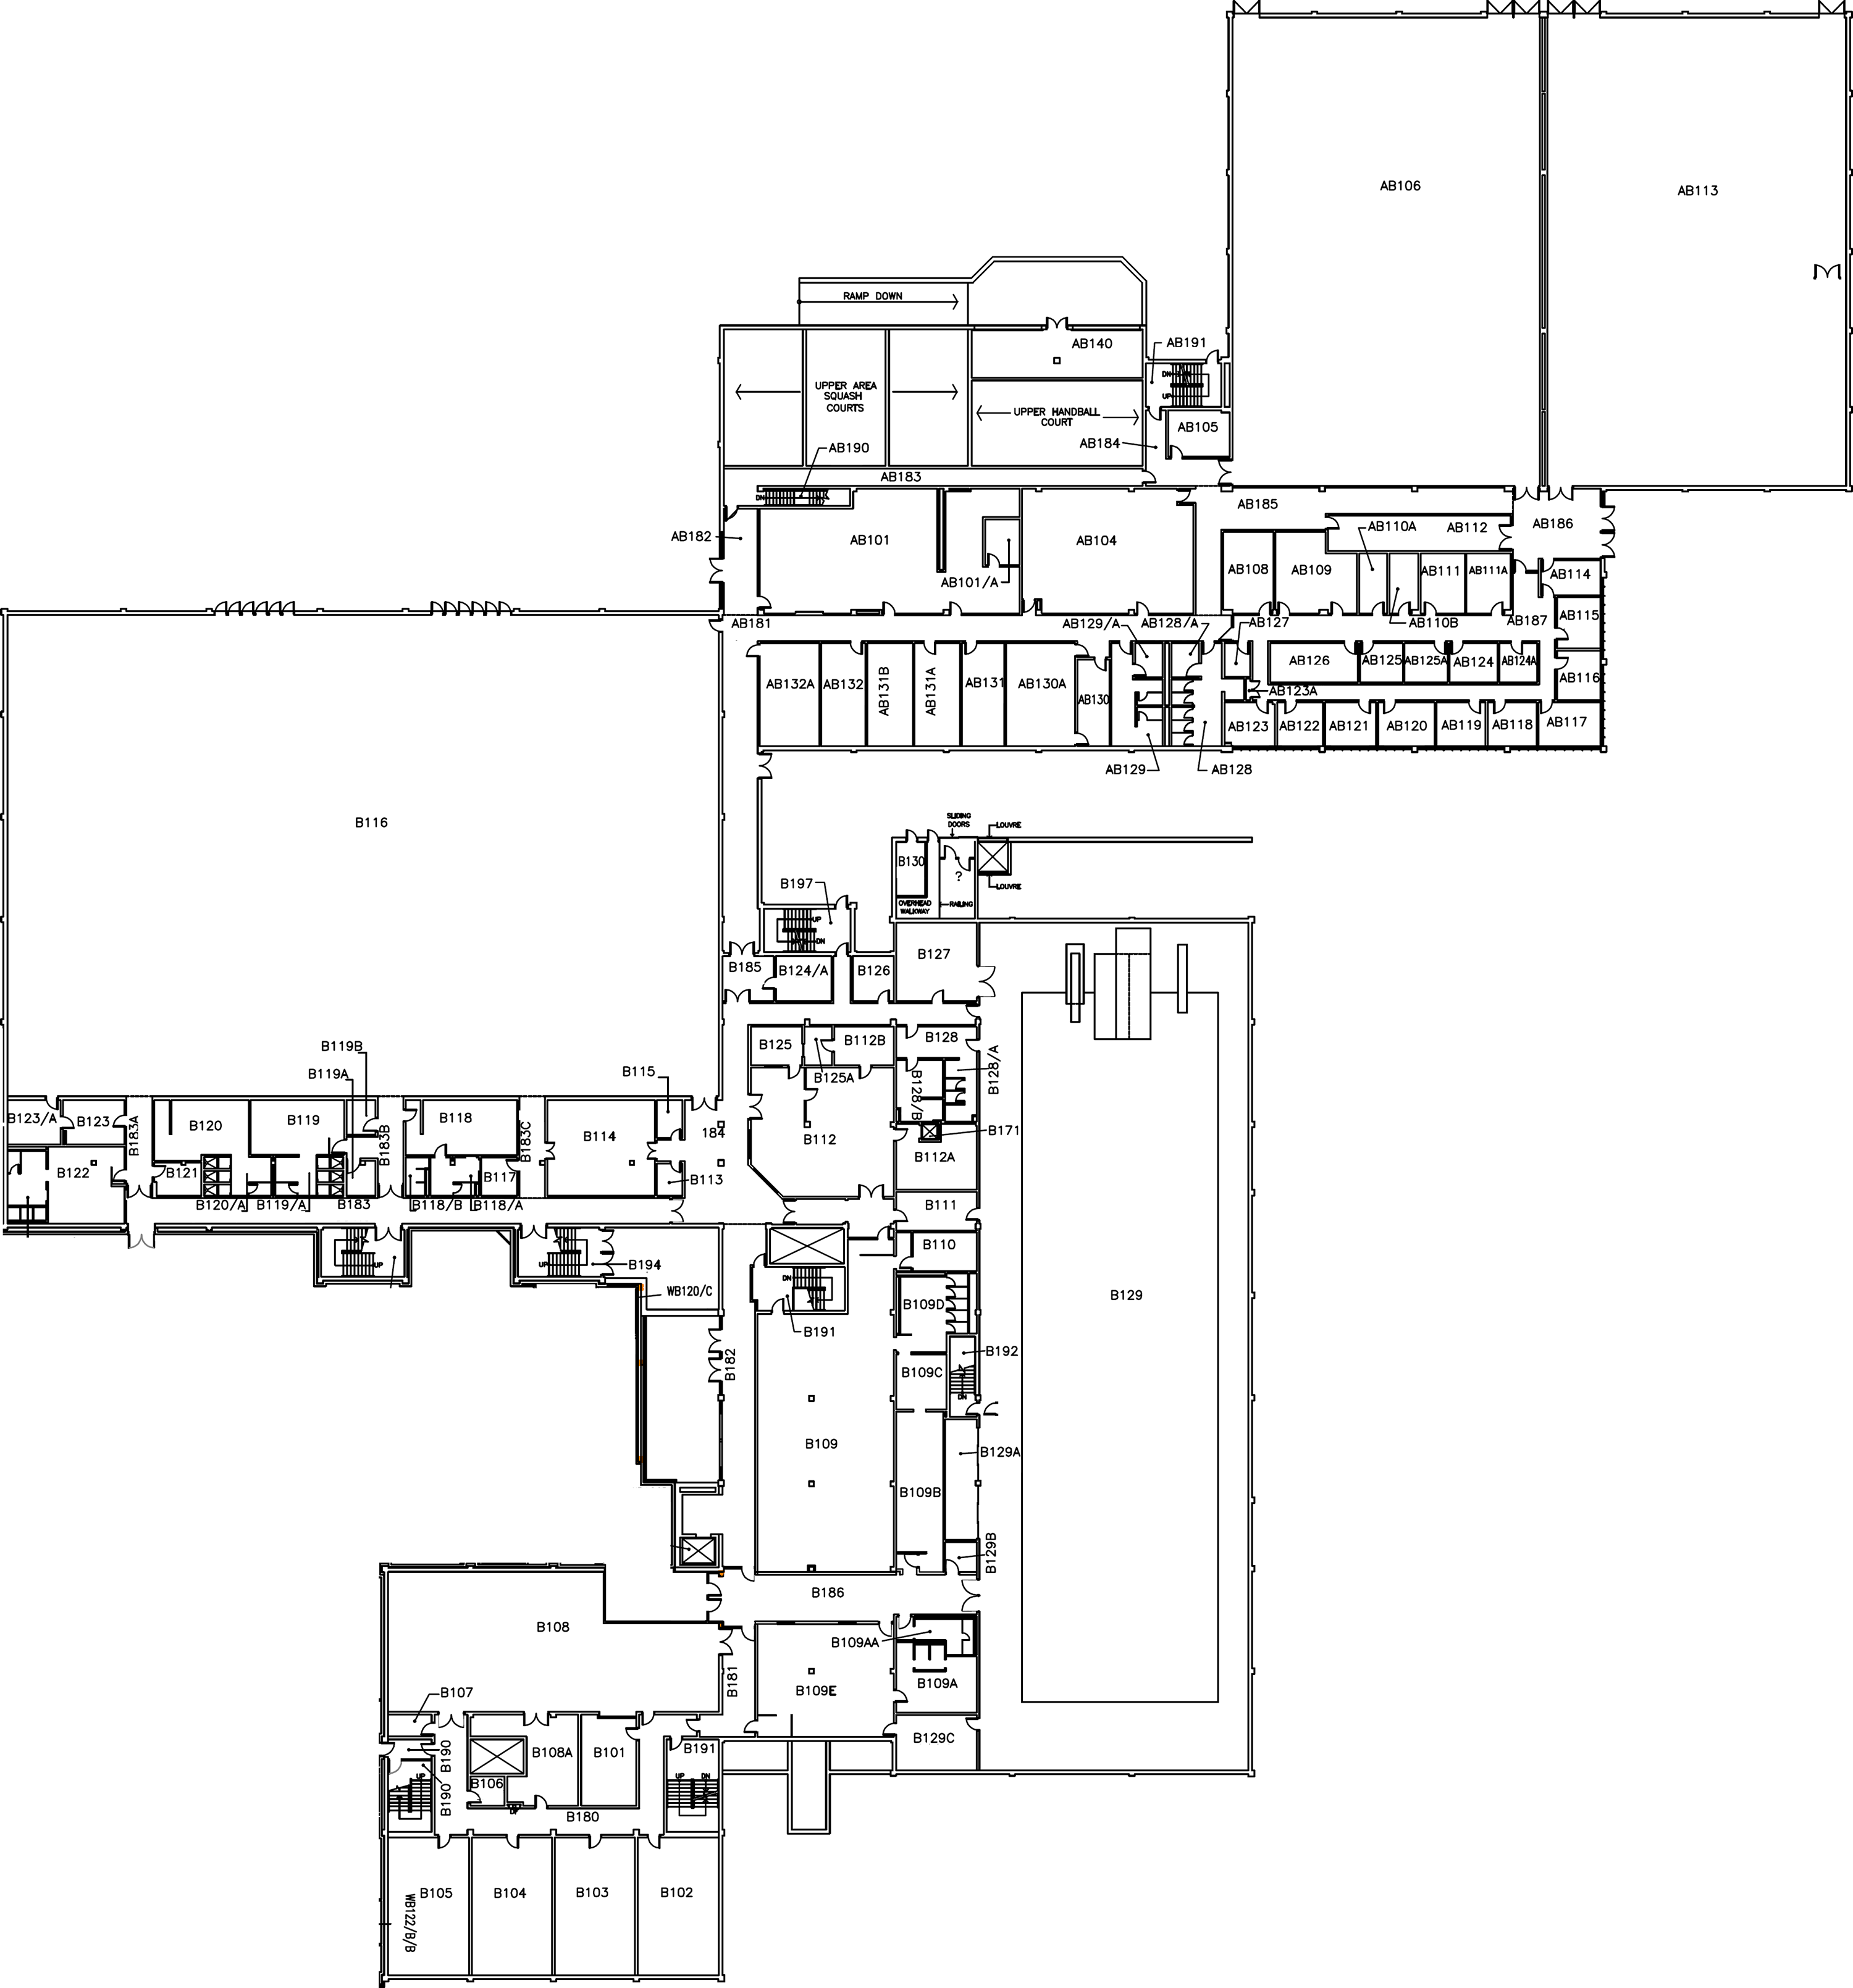 Mcmaster University Ivor Wynne Centre Basement Floor Map 